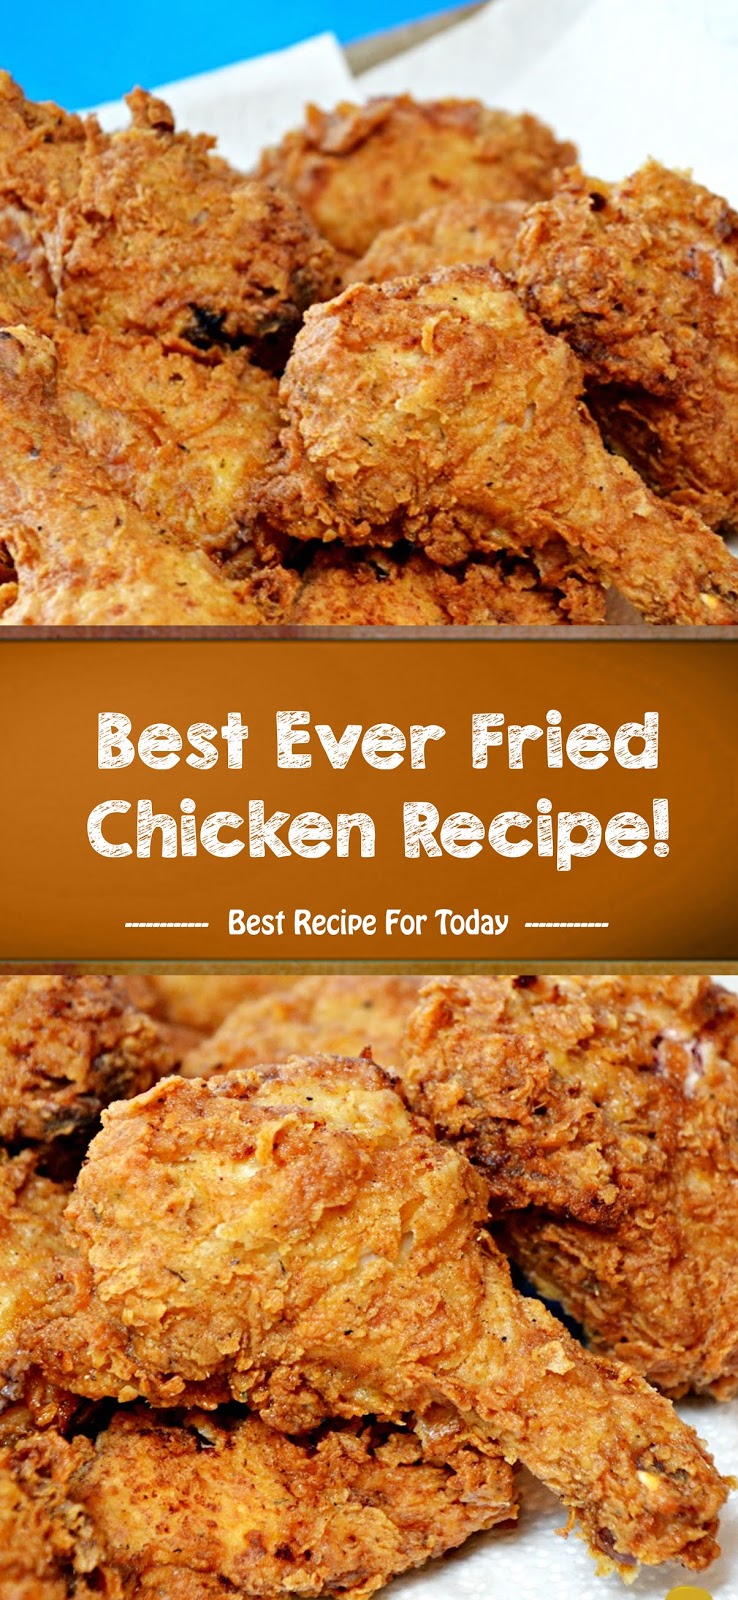 Best Ever Fried Chicken Recipe! - 3 SECONDS